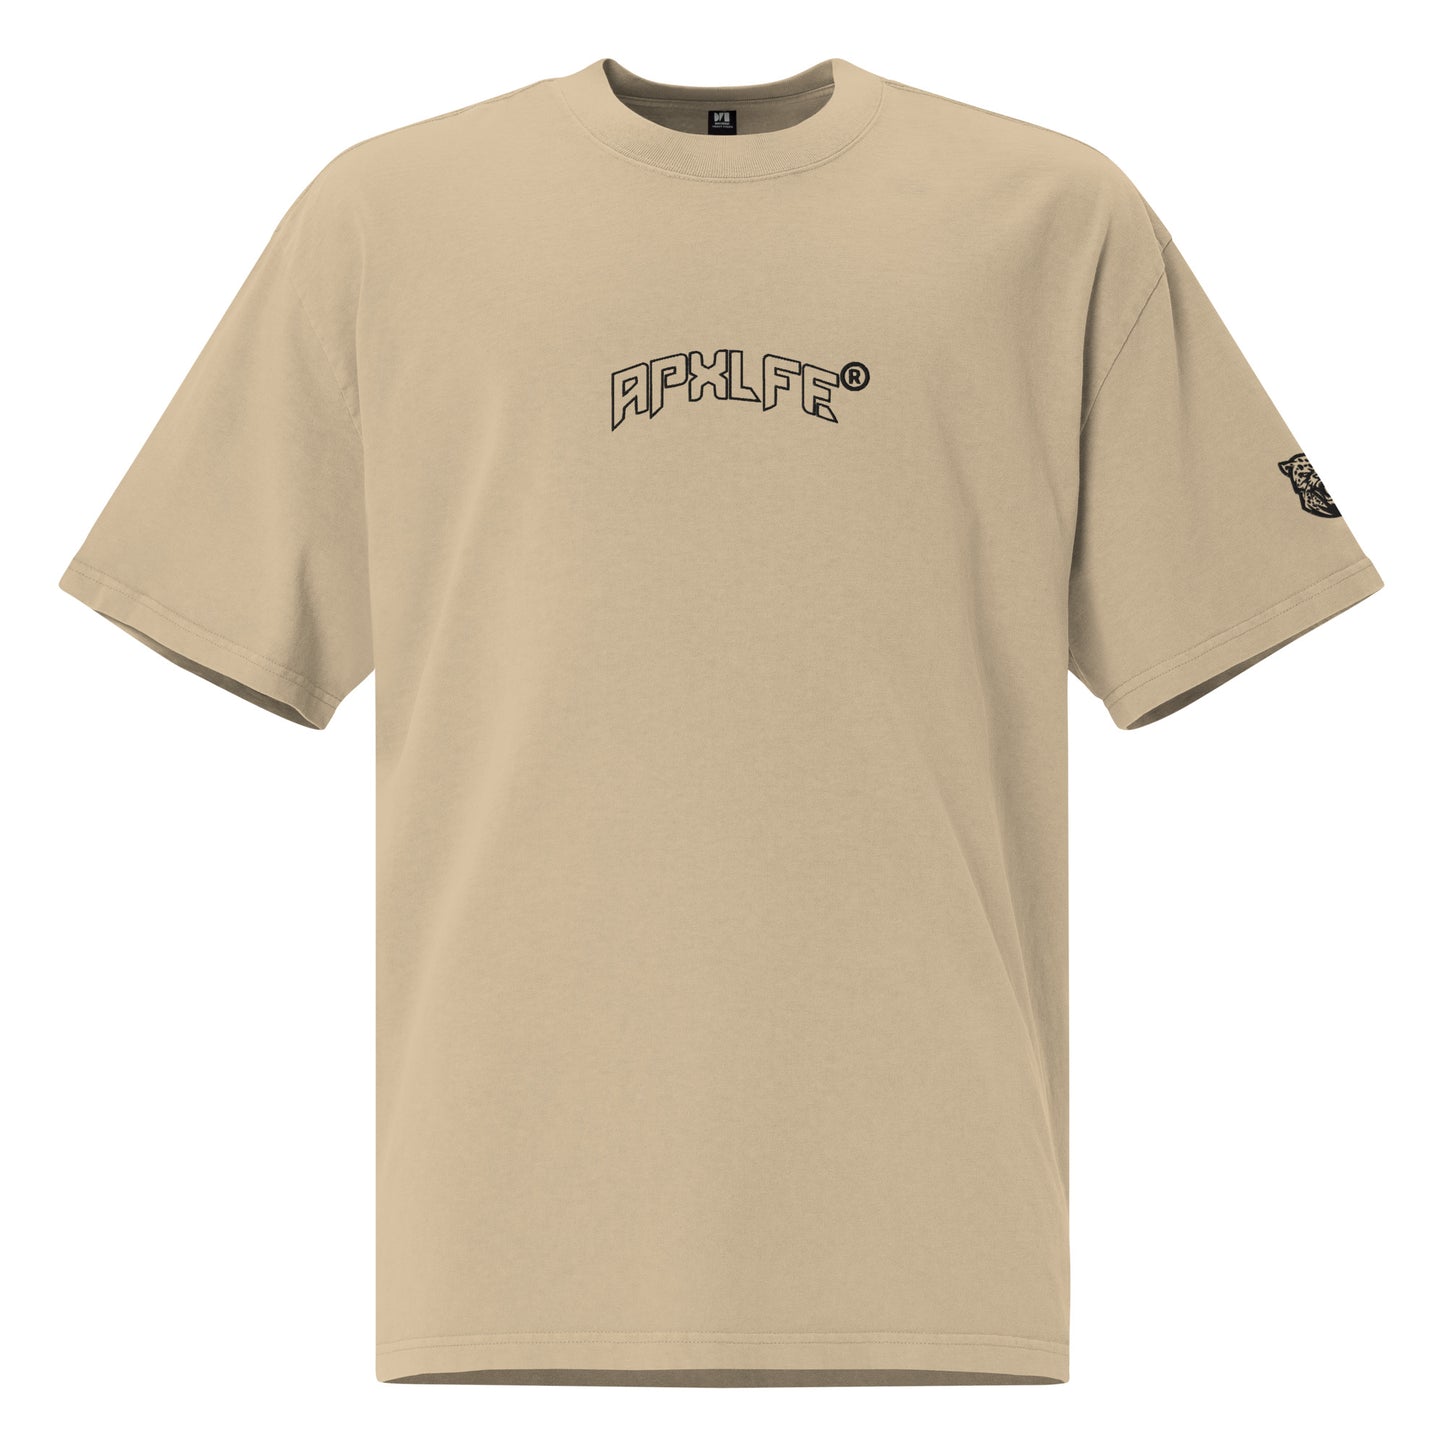 Oversized APXLFE t-shirt